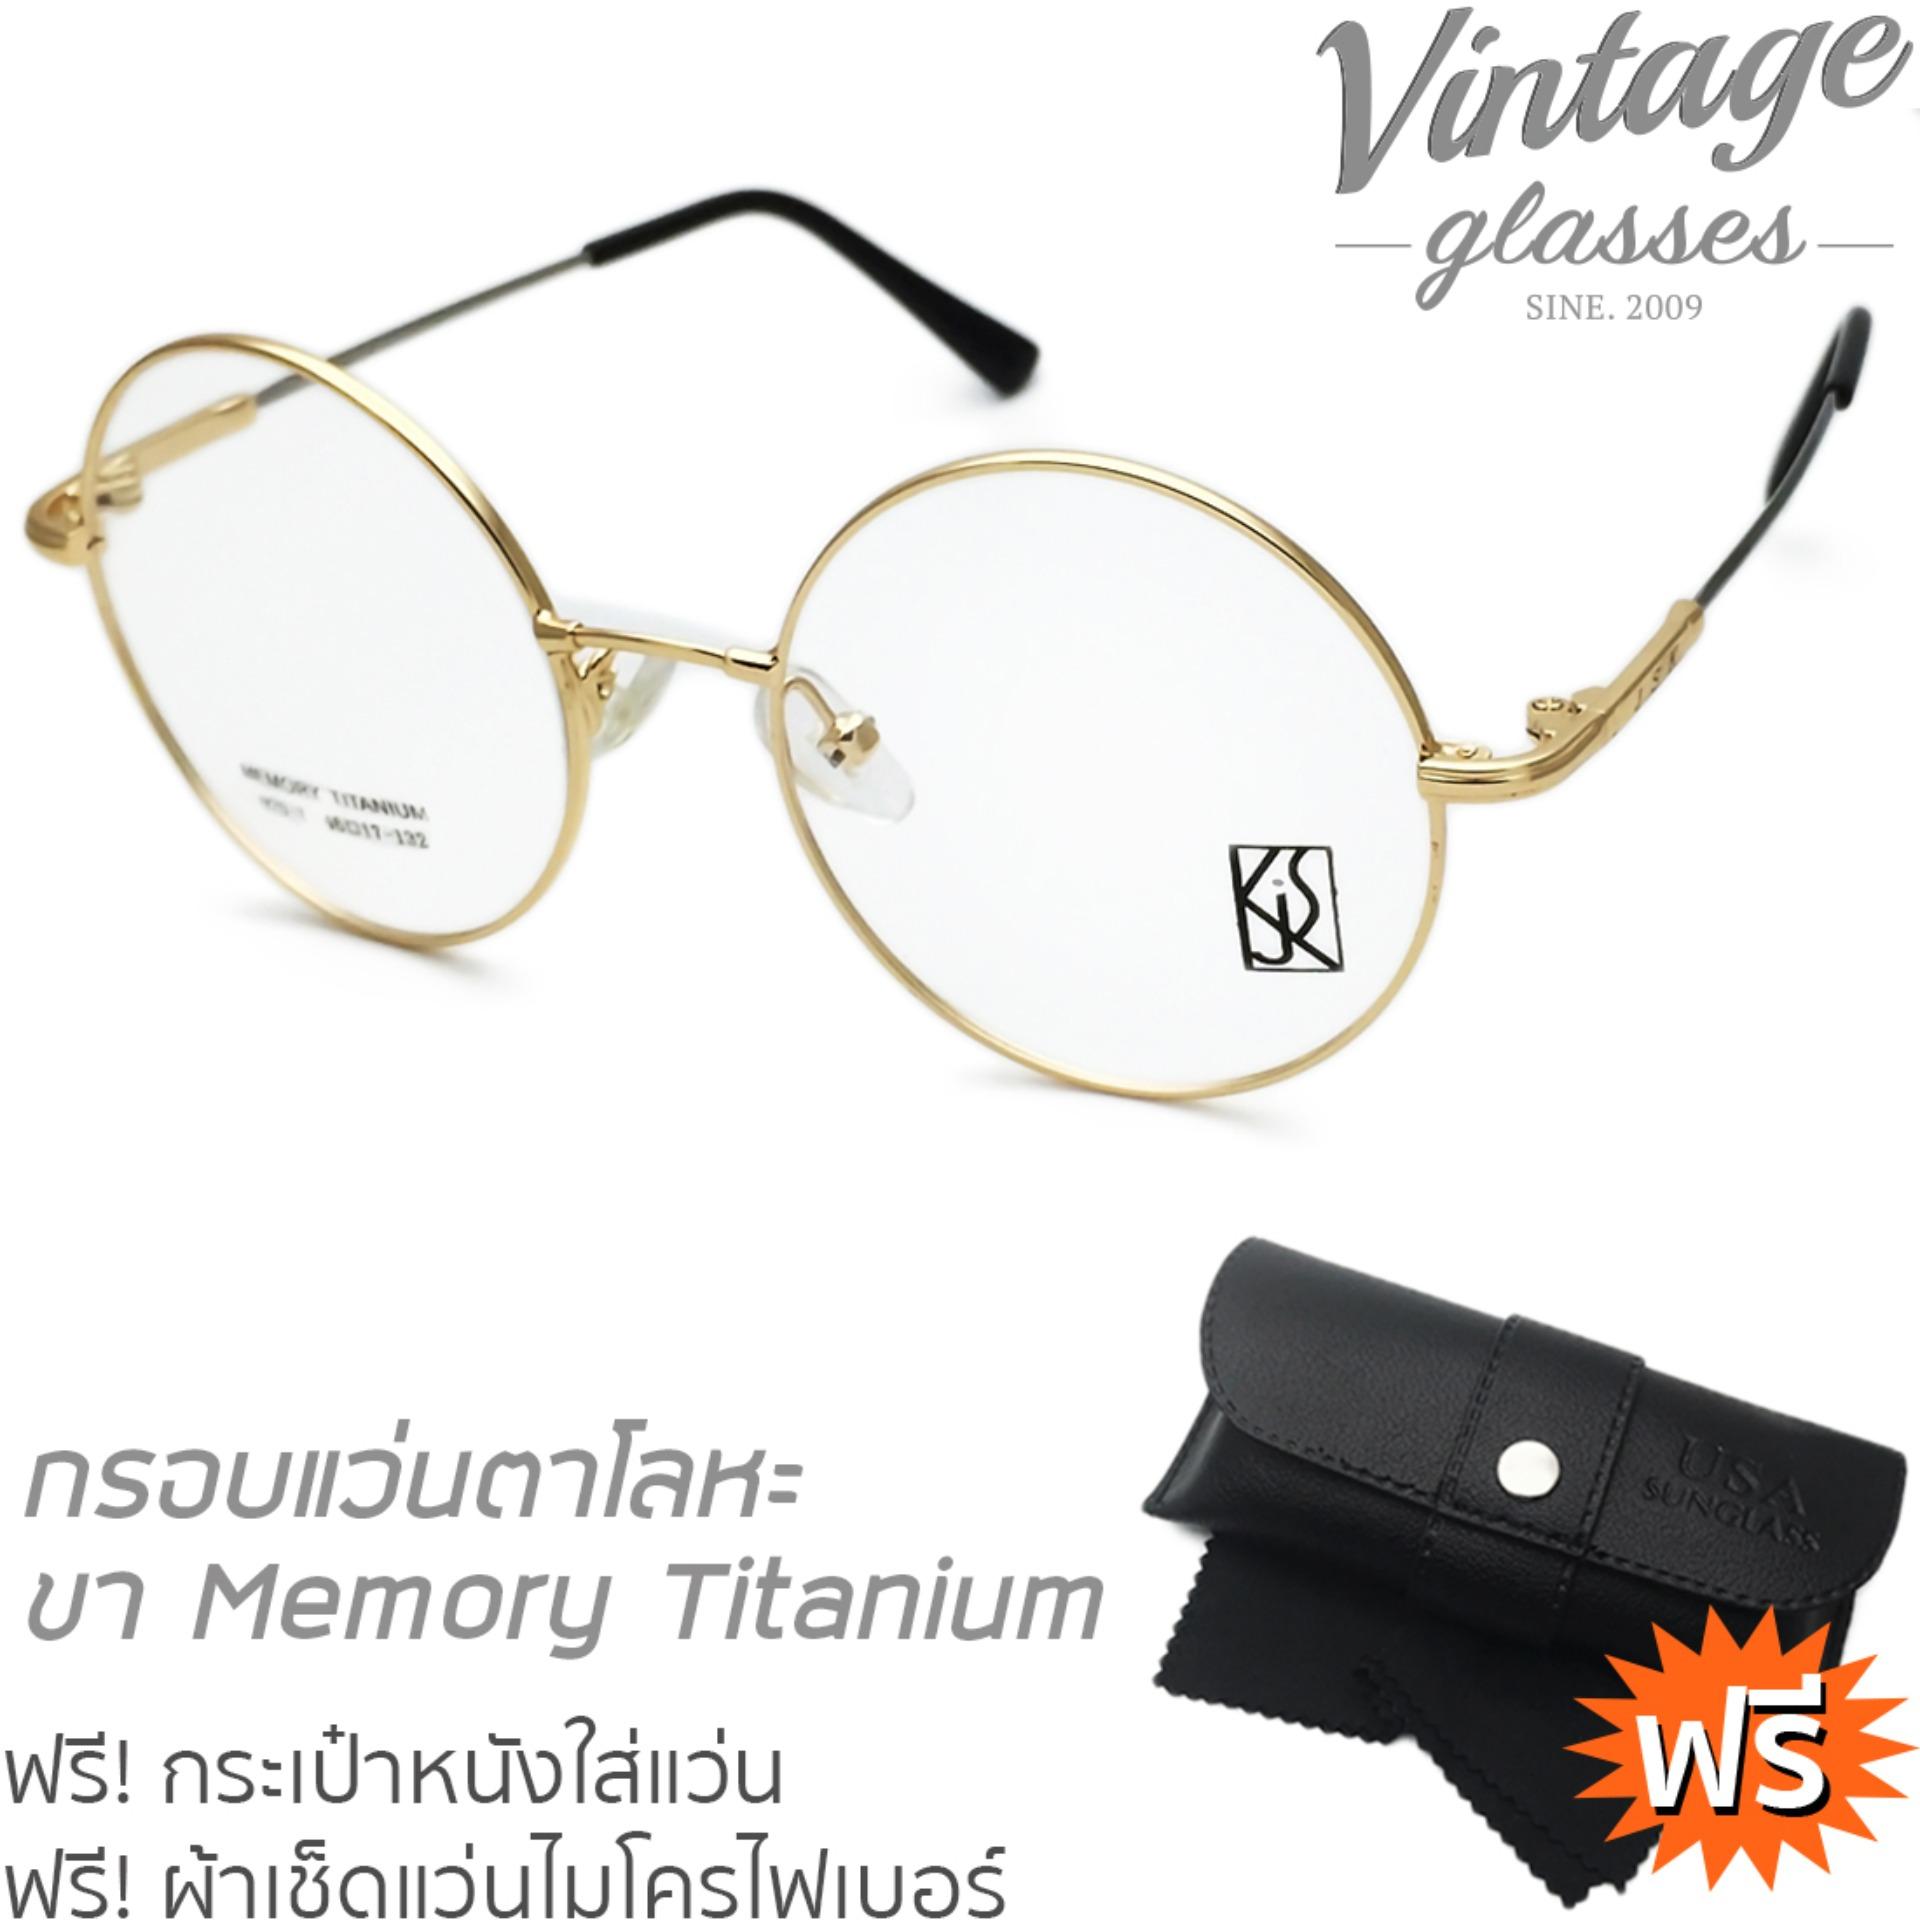 VINTAGE GLASSES JSK MEMORY TITANIUM Glasses แว่นตากรอบกลม ขาไทเทเนียม